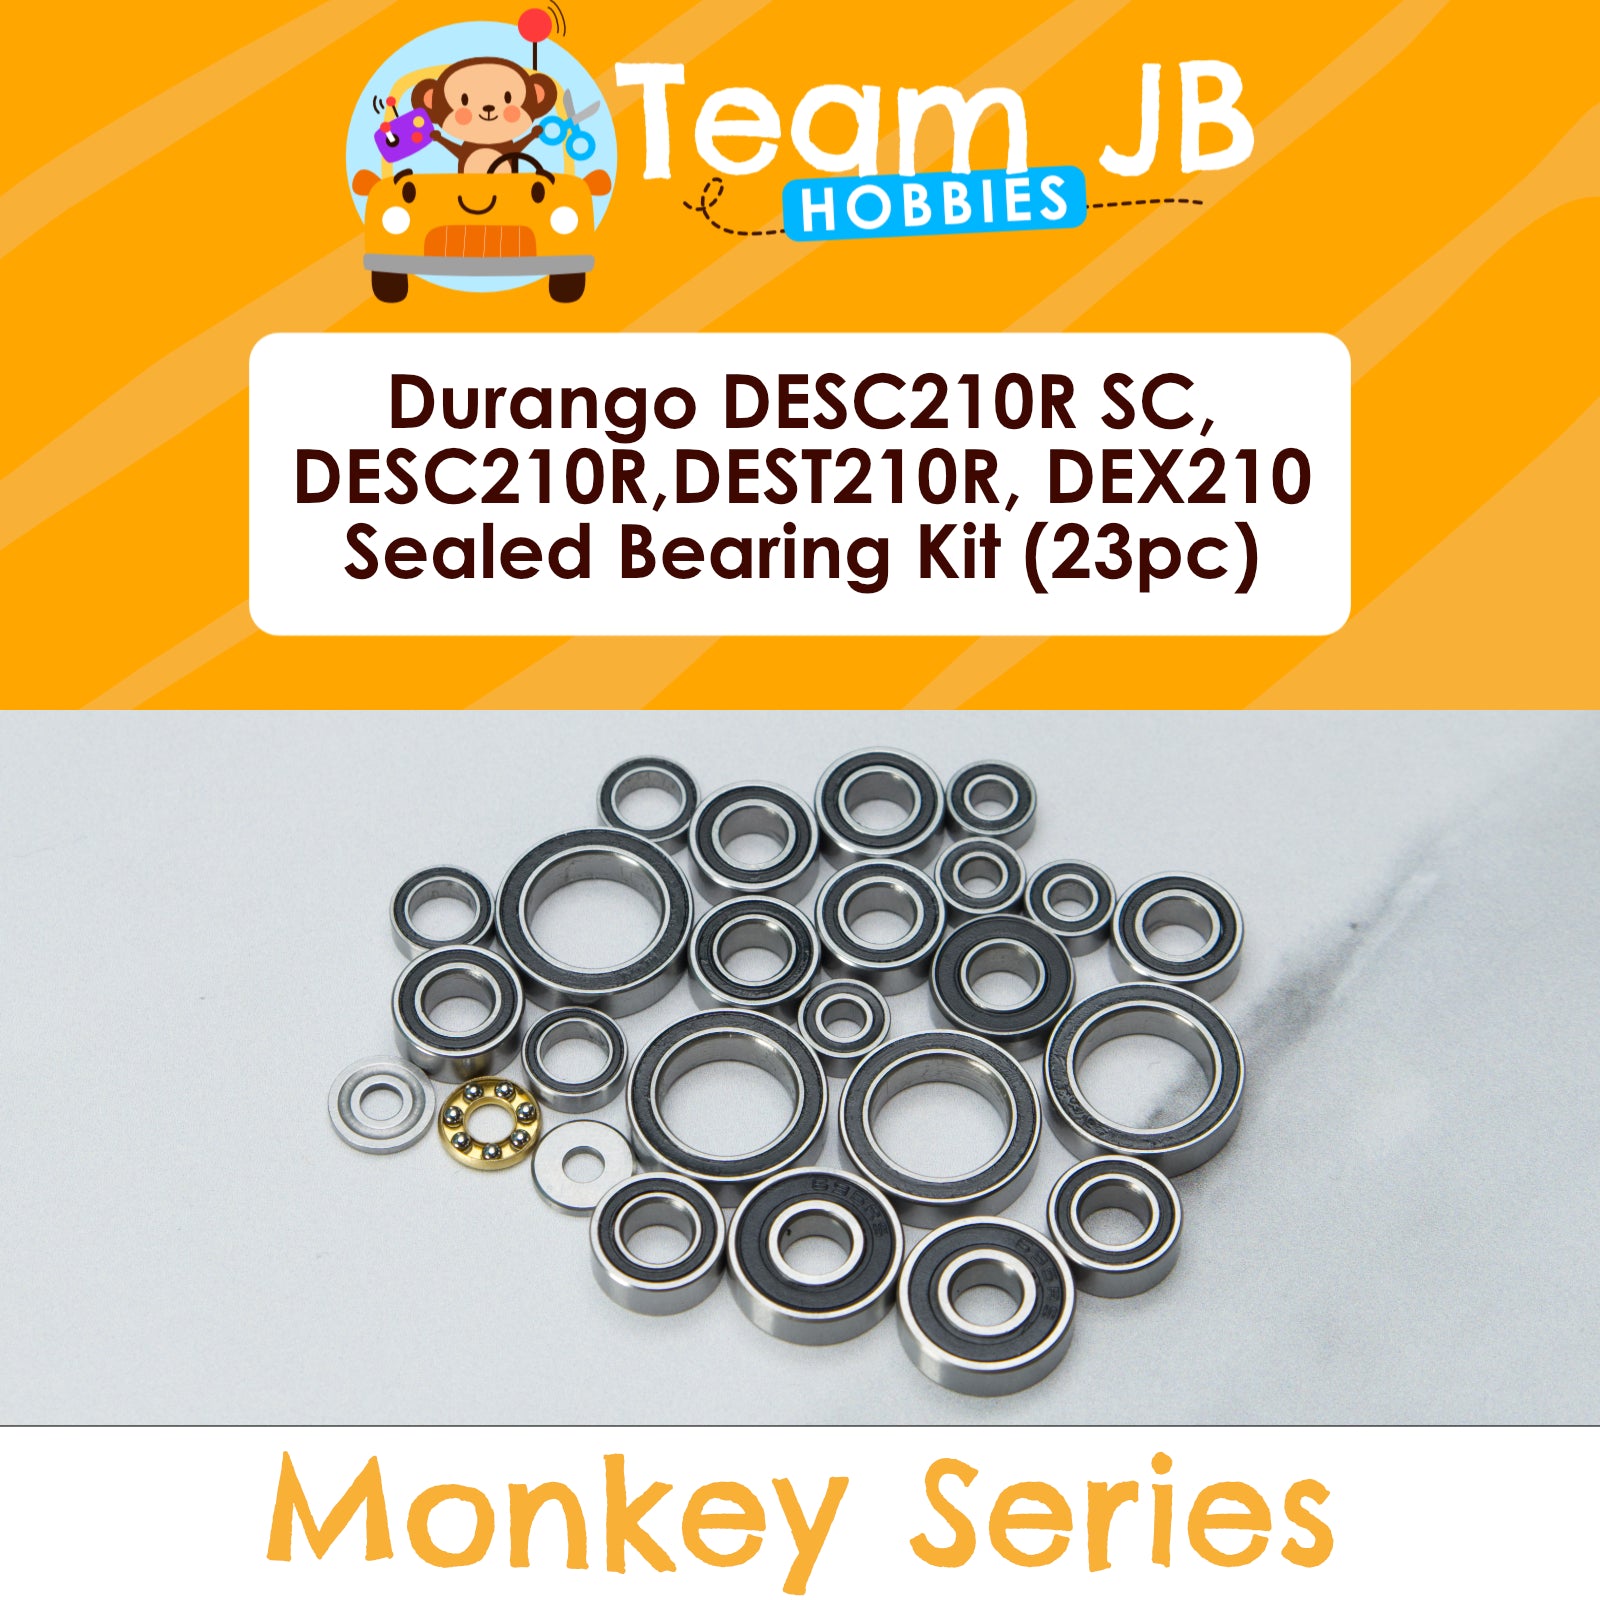 Durango DESC210R SC, DESC210R, DEST210R, DEX210, DEX210v2 EP, DEX210v3 EP - Sealed Bearing Kit